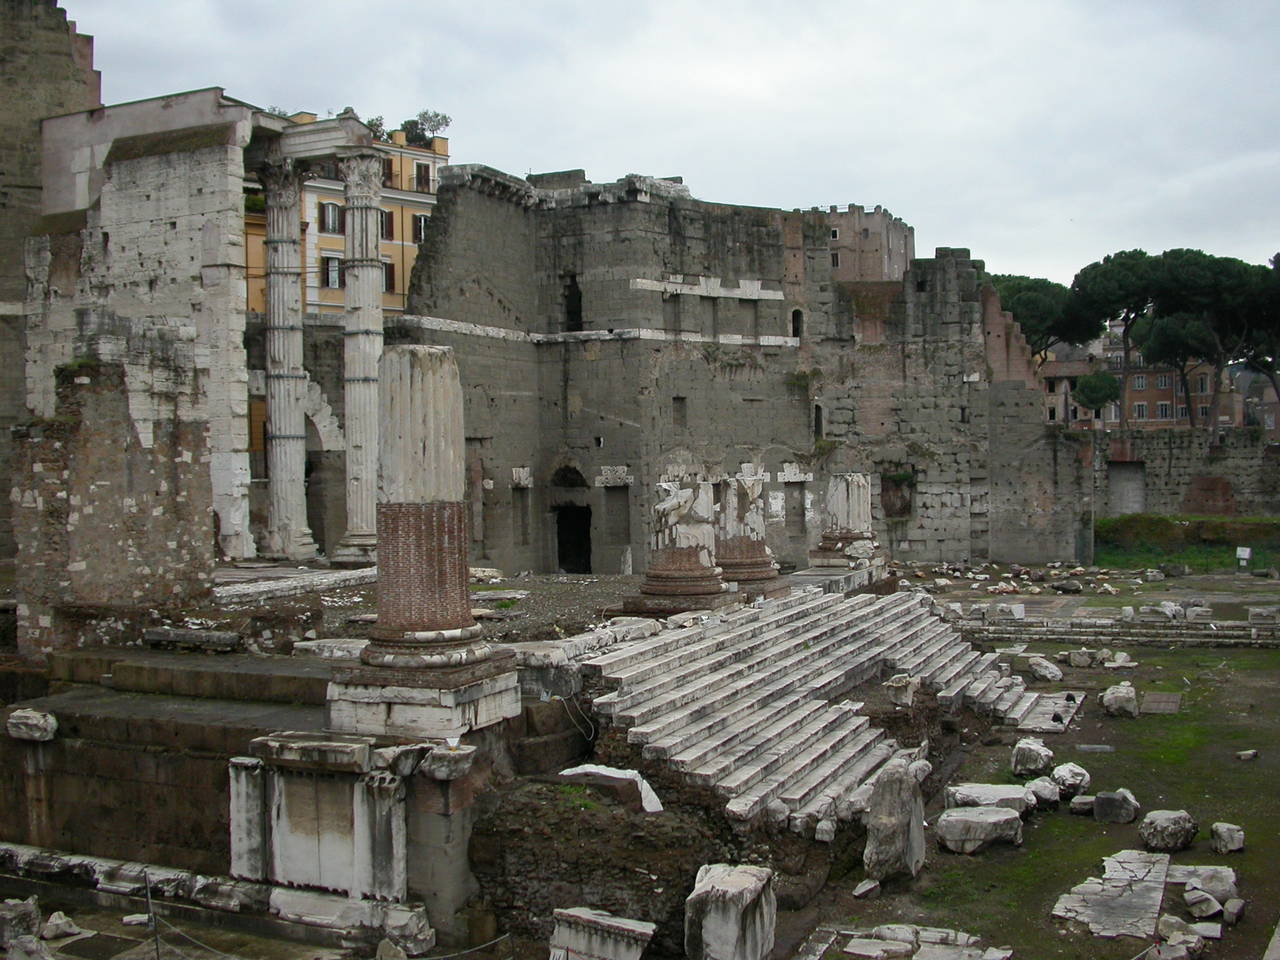 Augustusforum